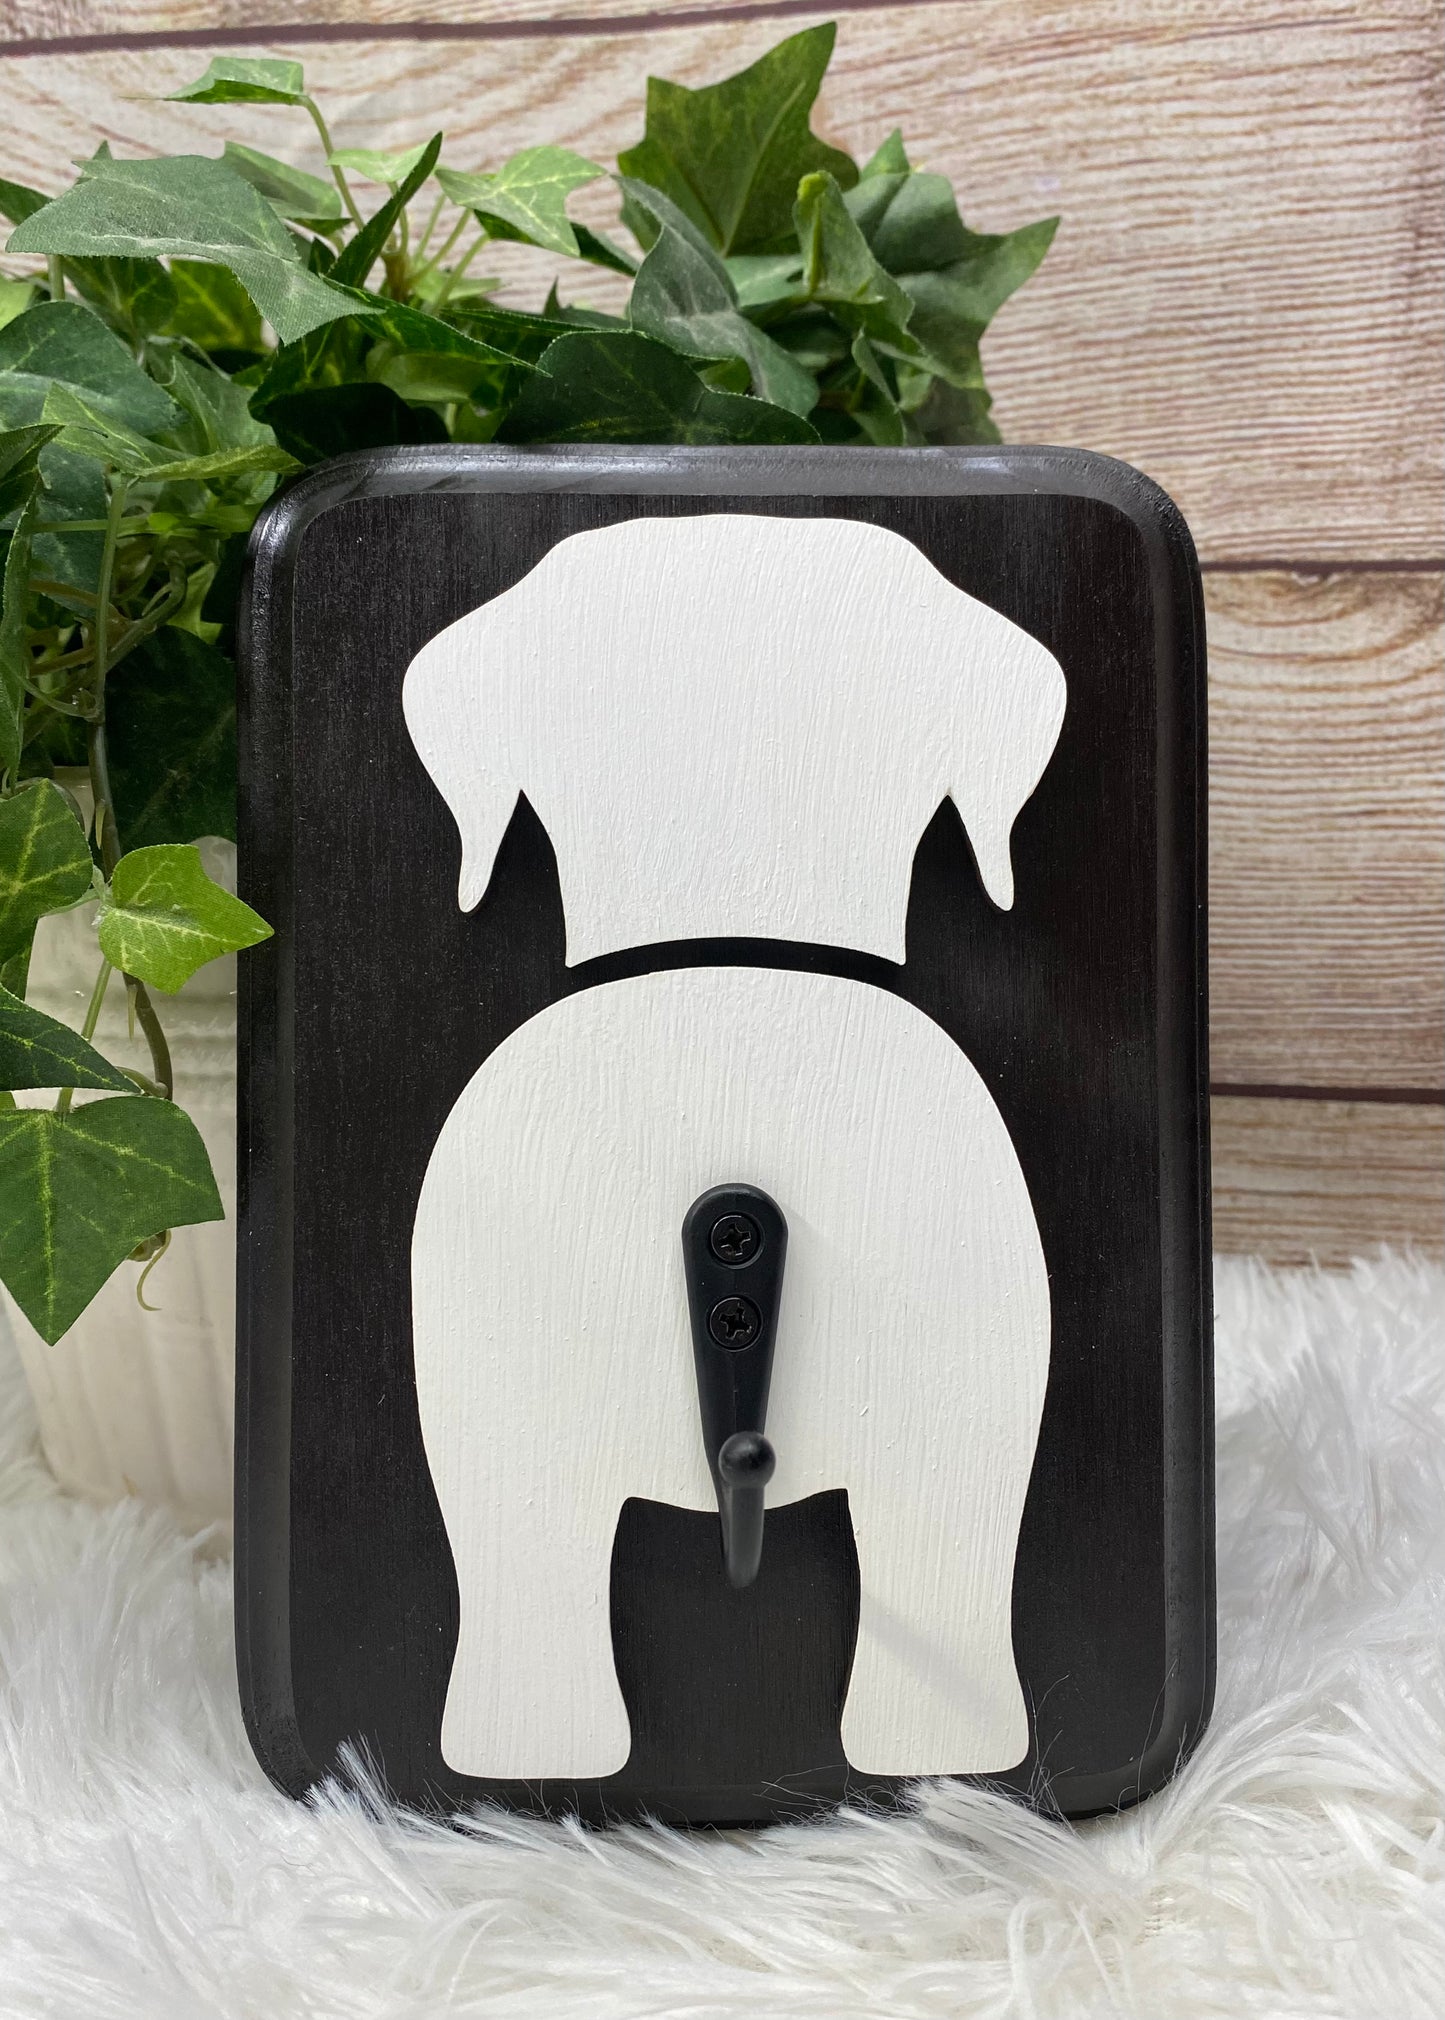 Rustic Wood Dog Leash Hanger: Stylish Organization for Pet Essentials